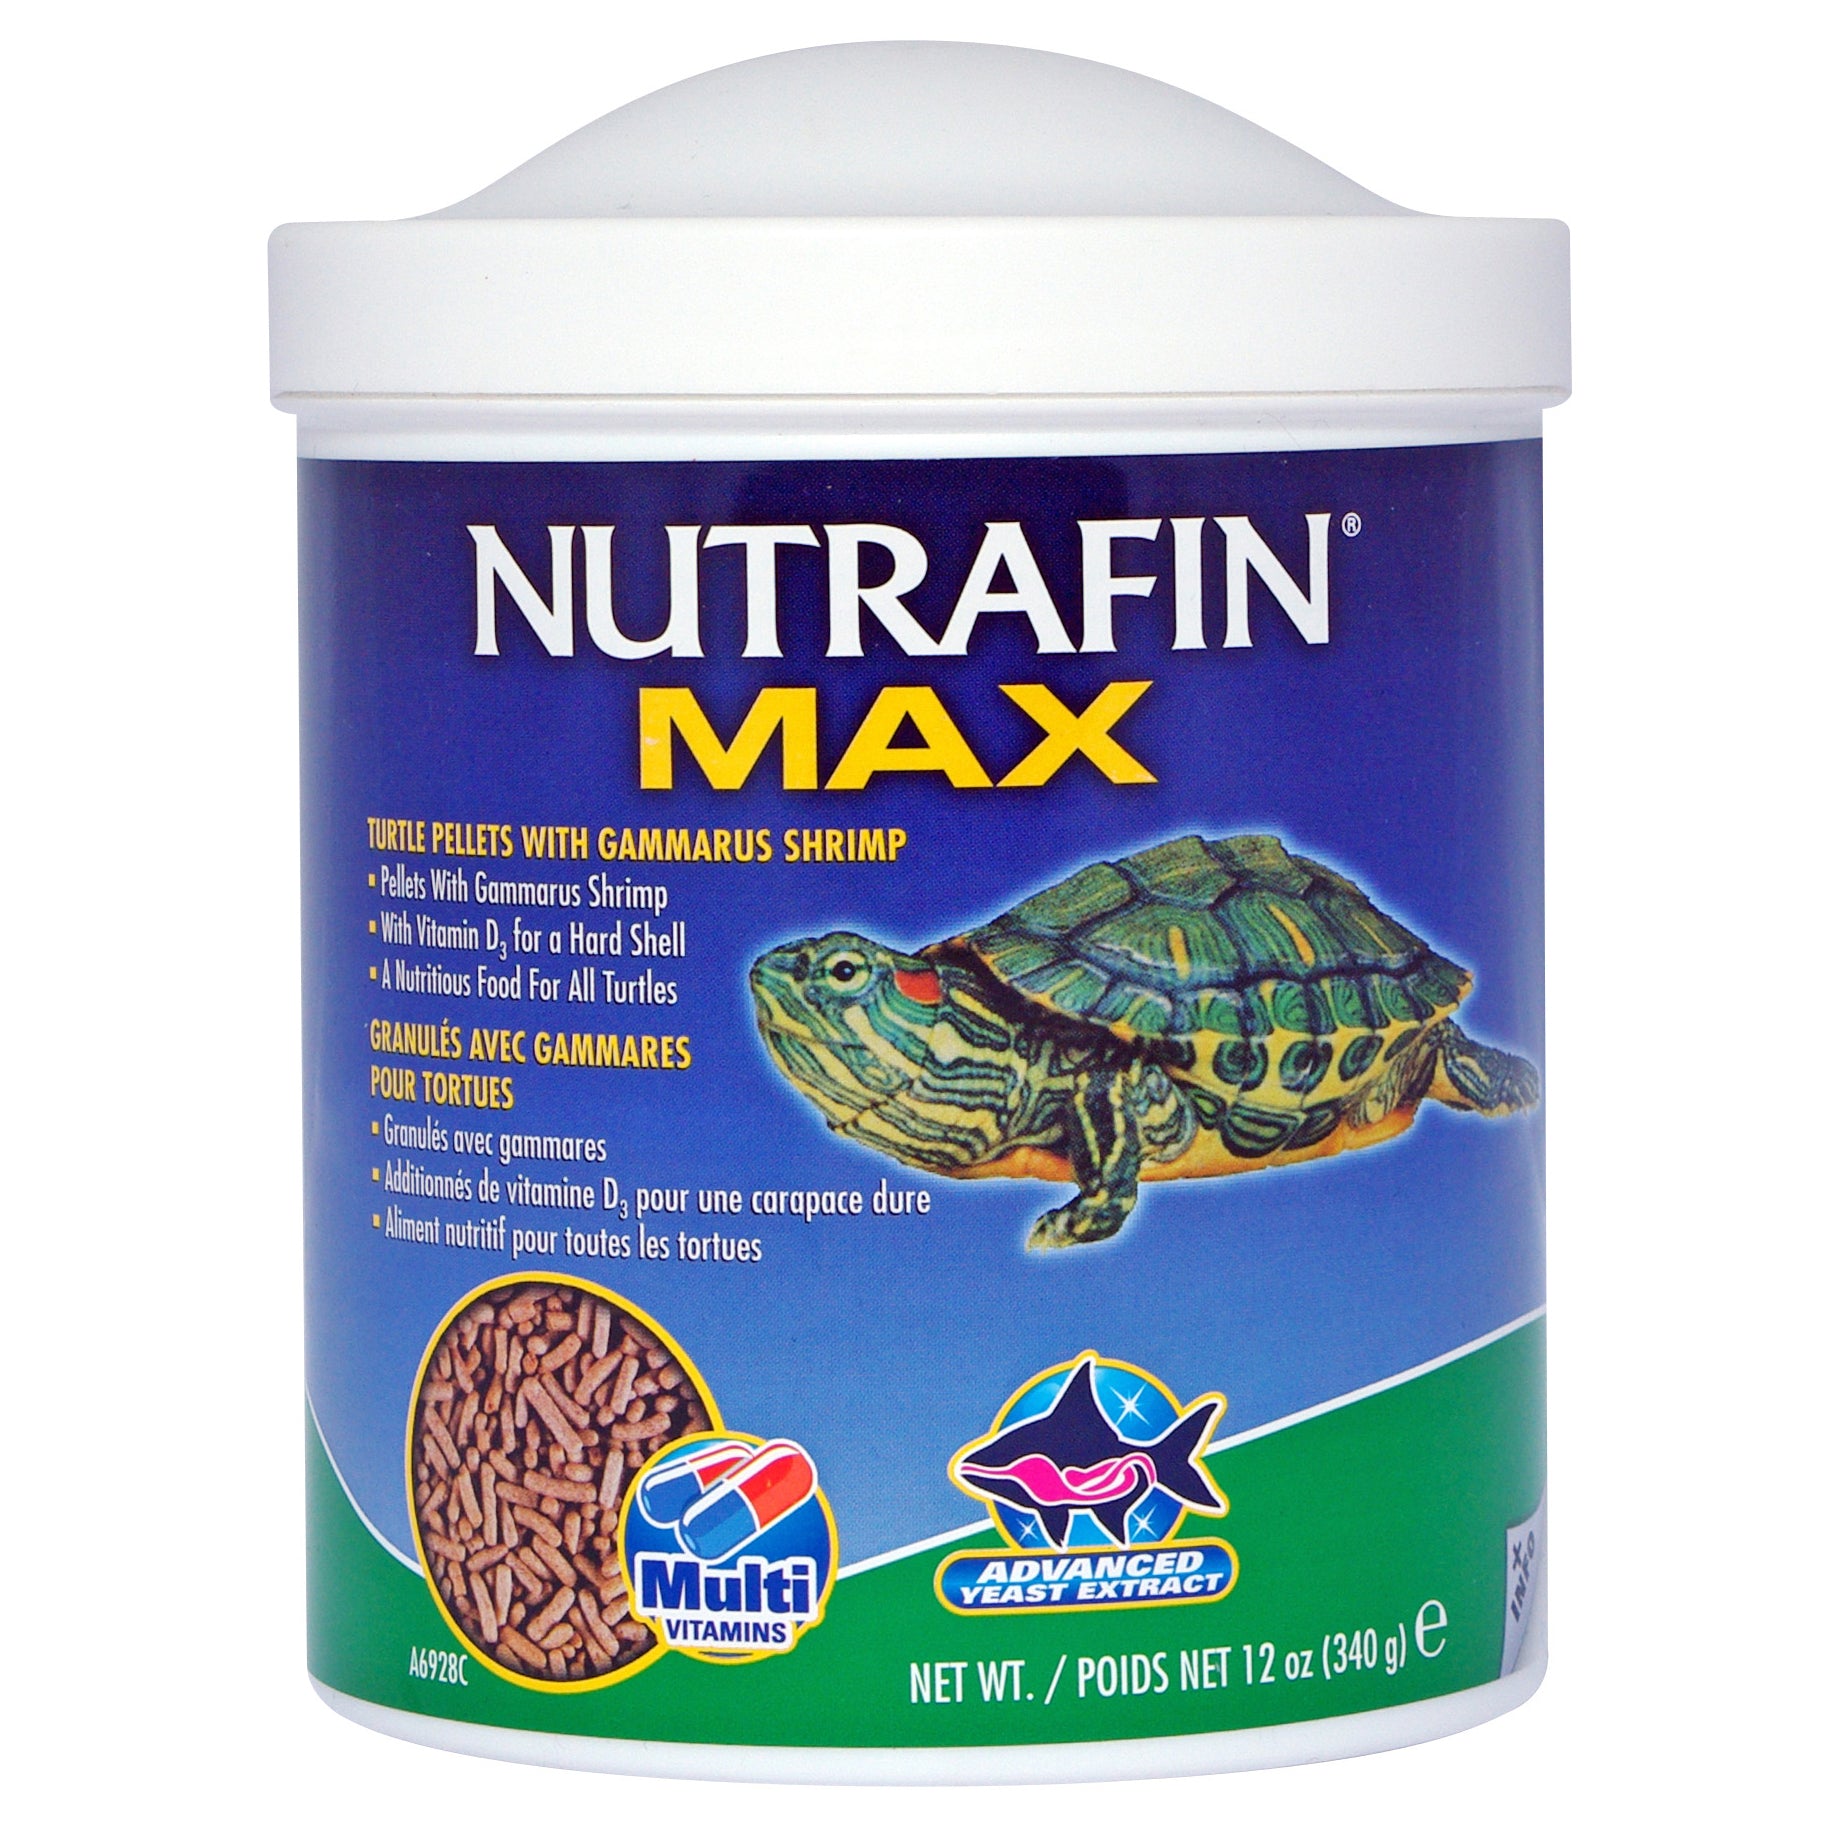 Nutrafin Max Turtle Pellets With Gammarus Shrimp 